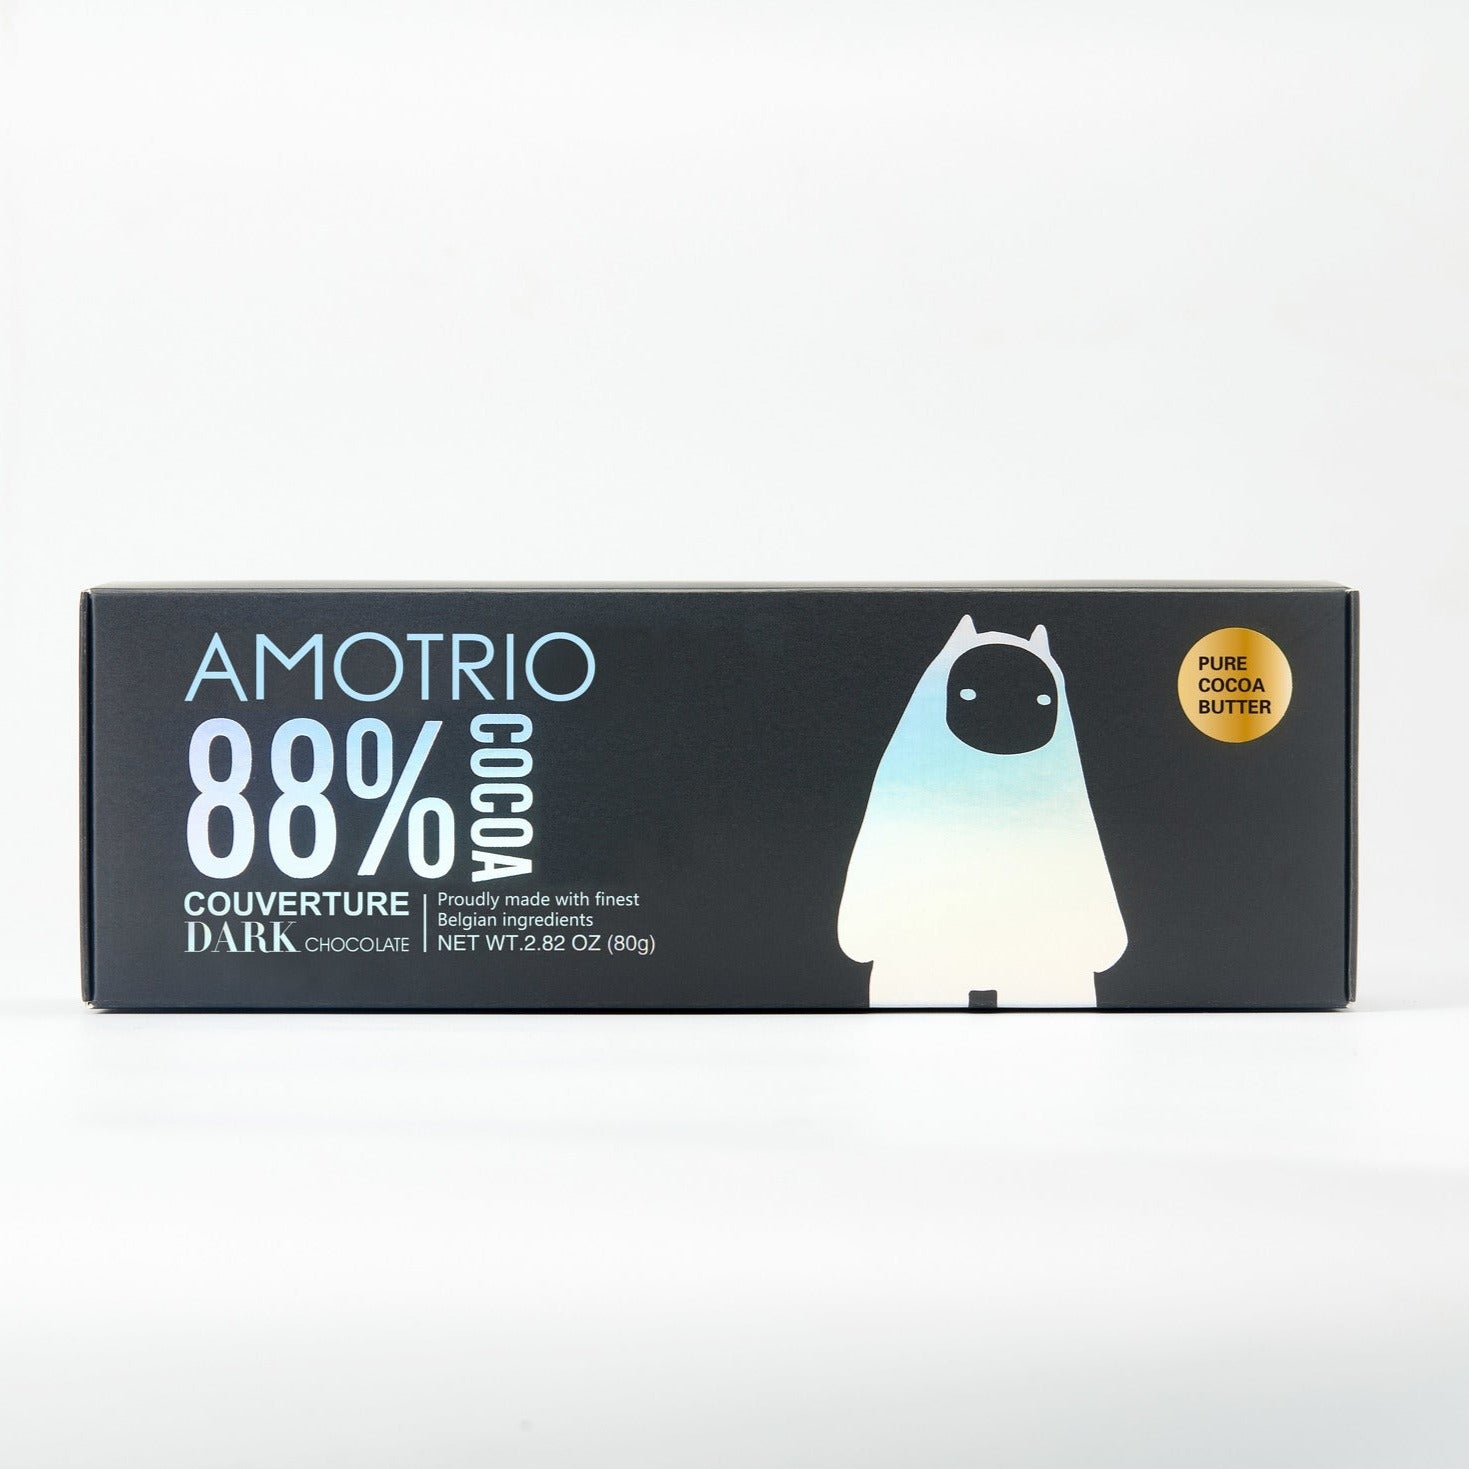 Amotrio Couverture Dark Chocolate 88%